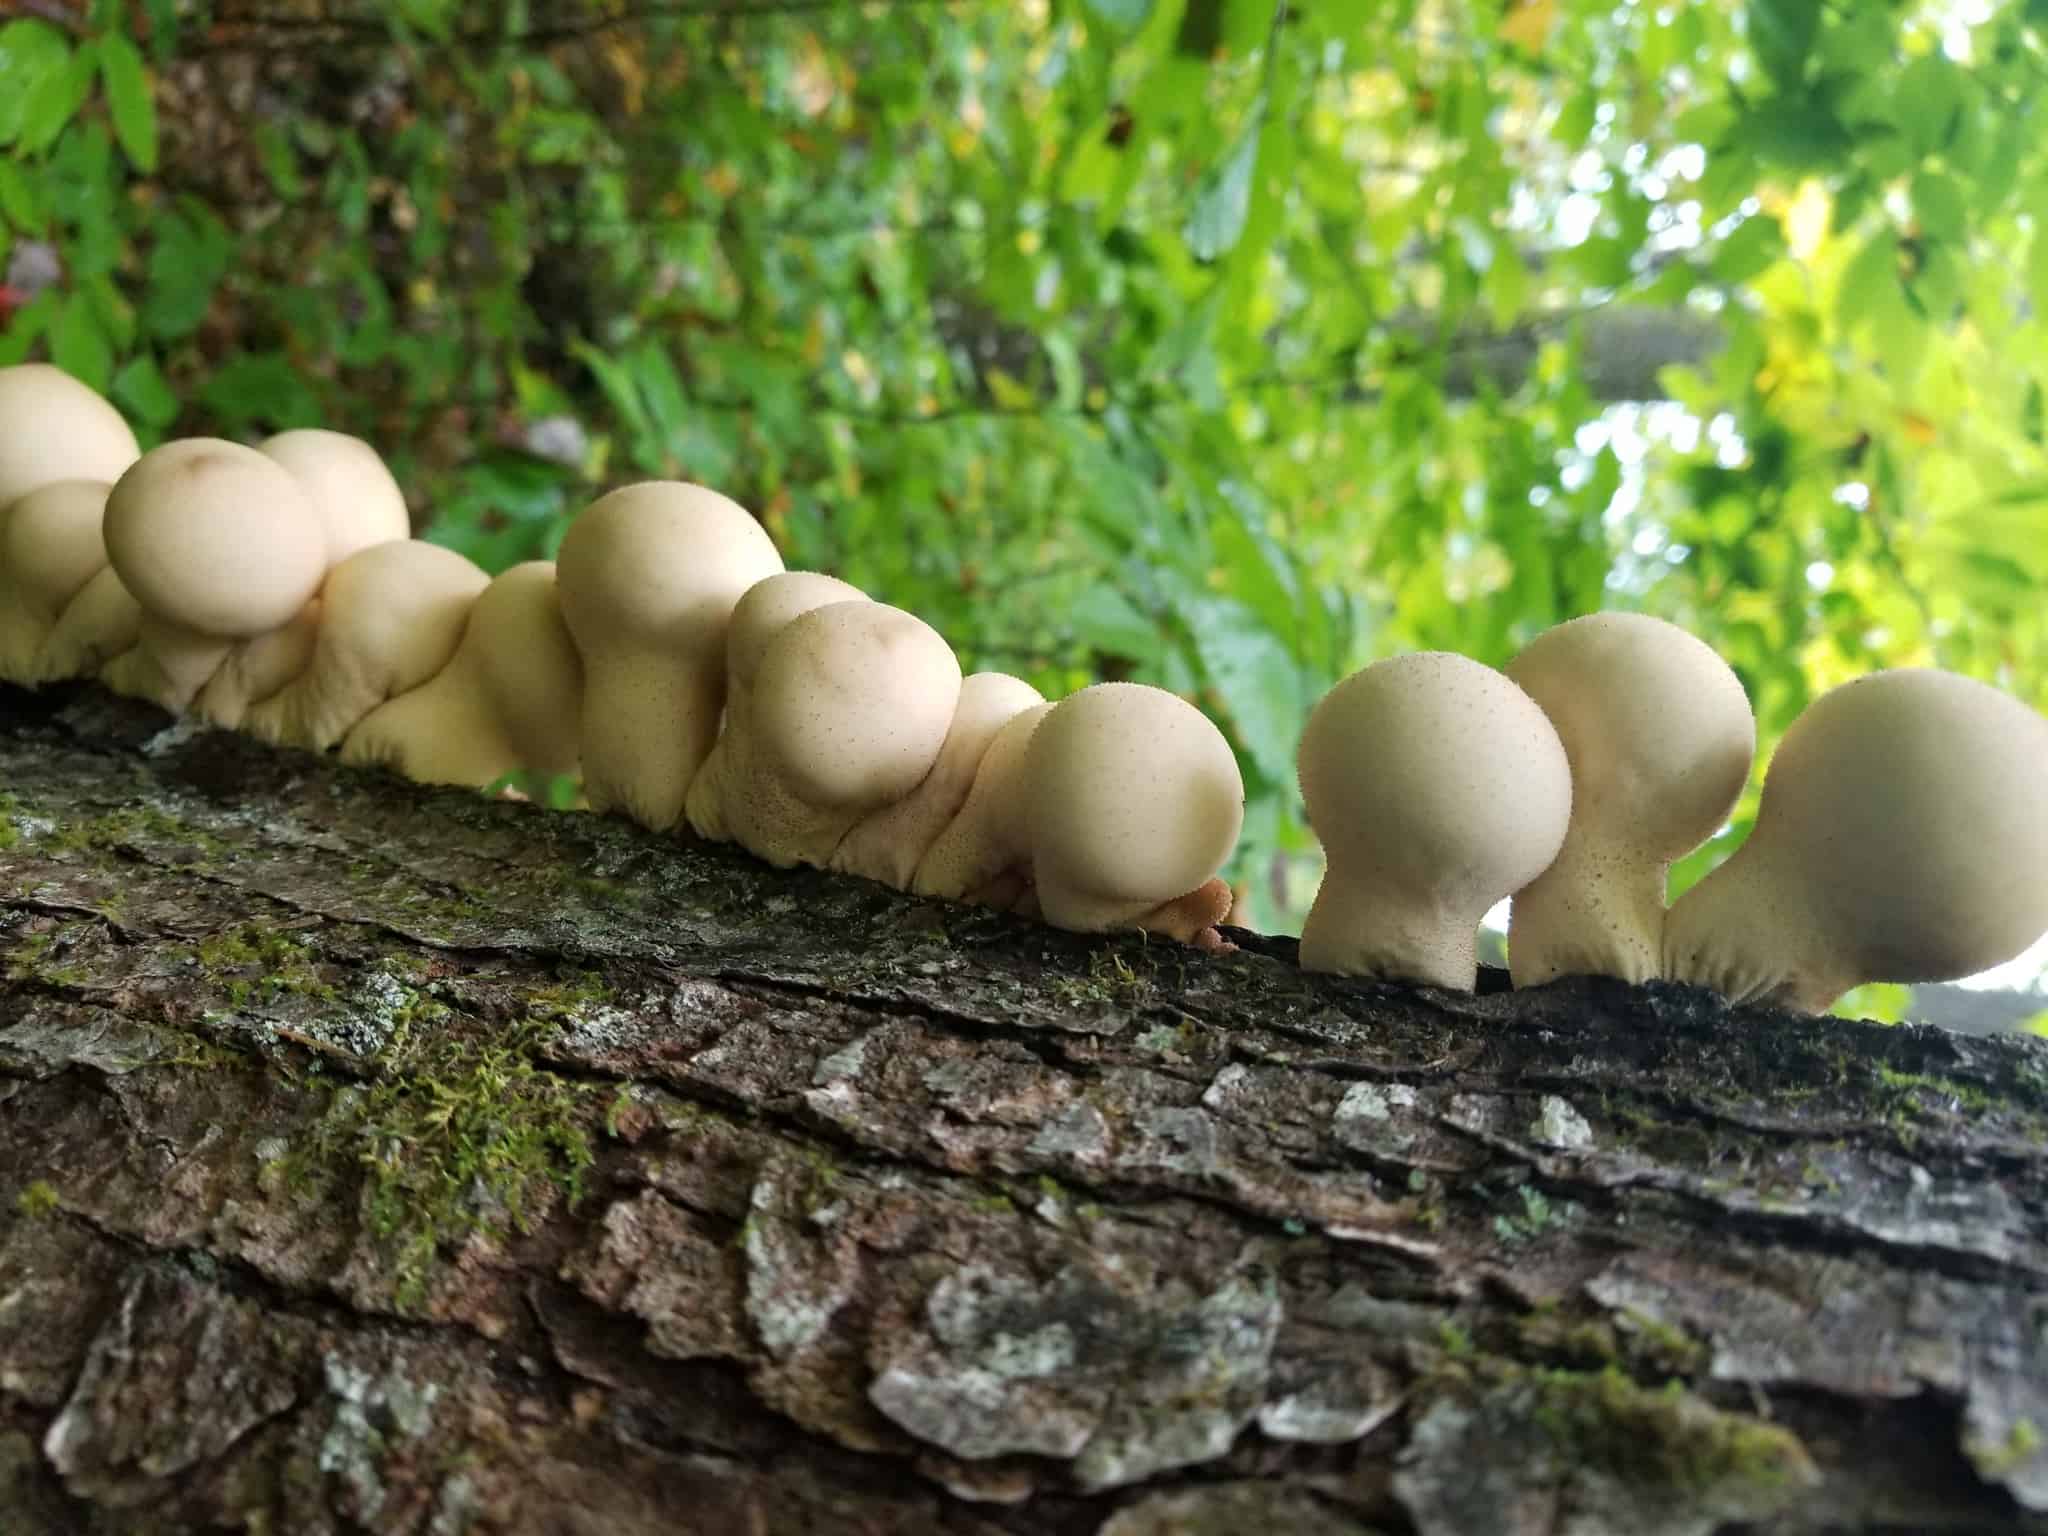 The Mighty Mushroom Walk